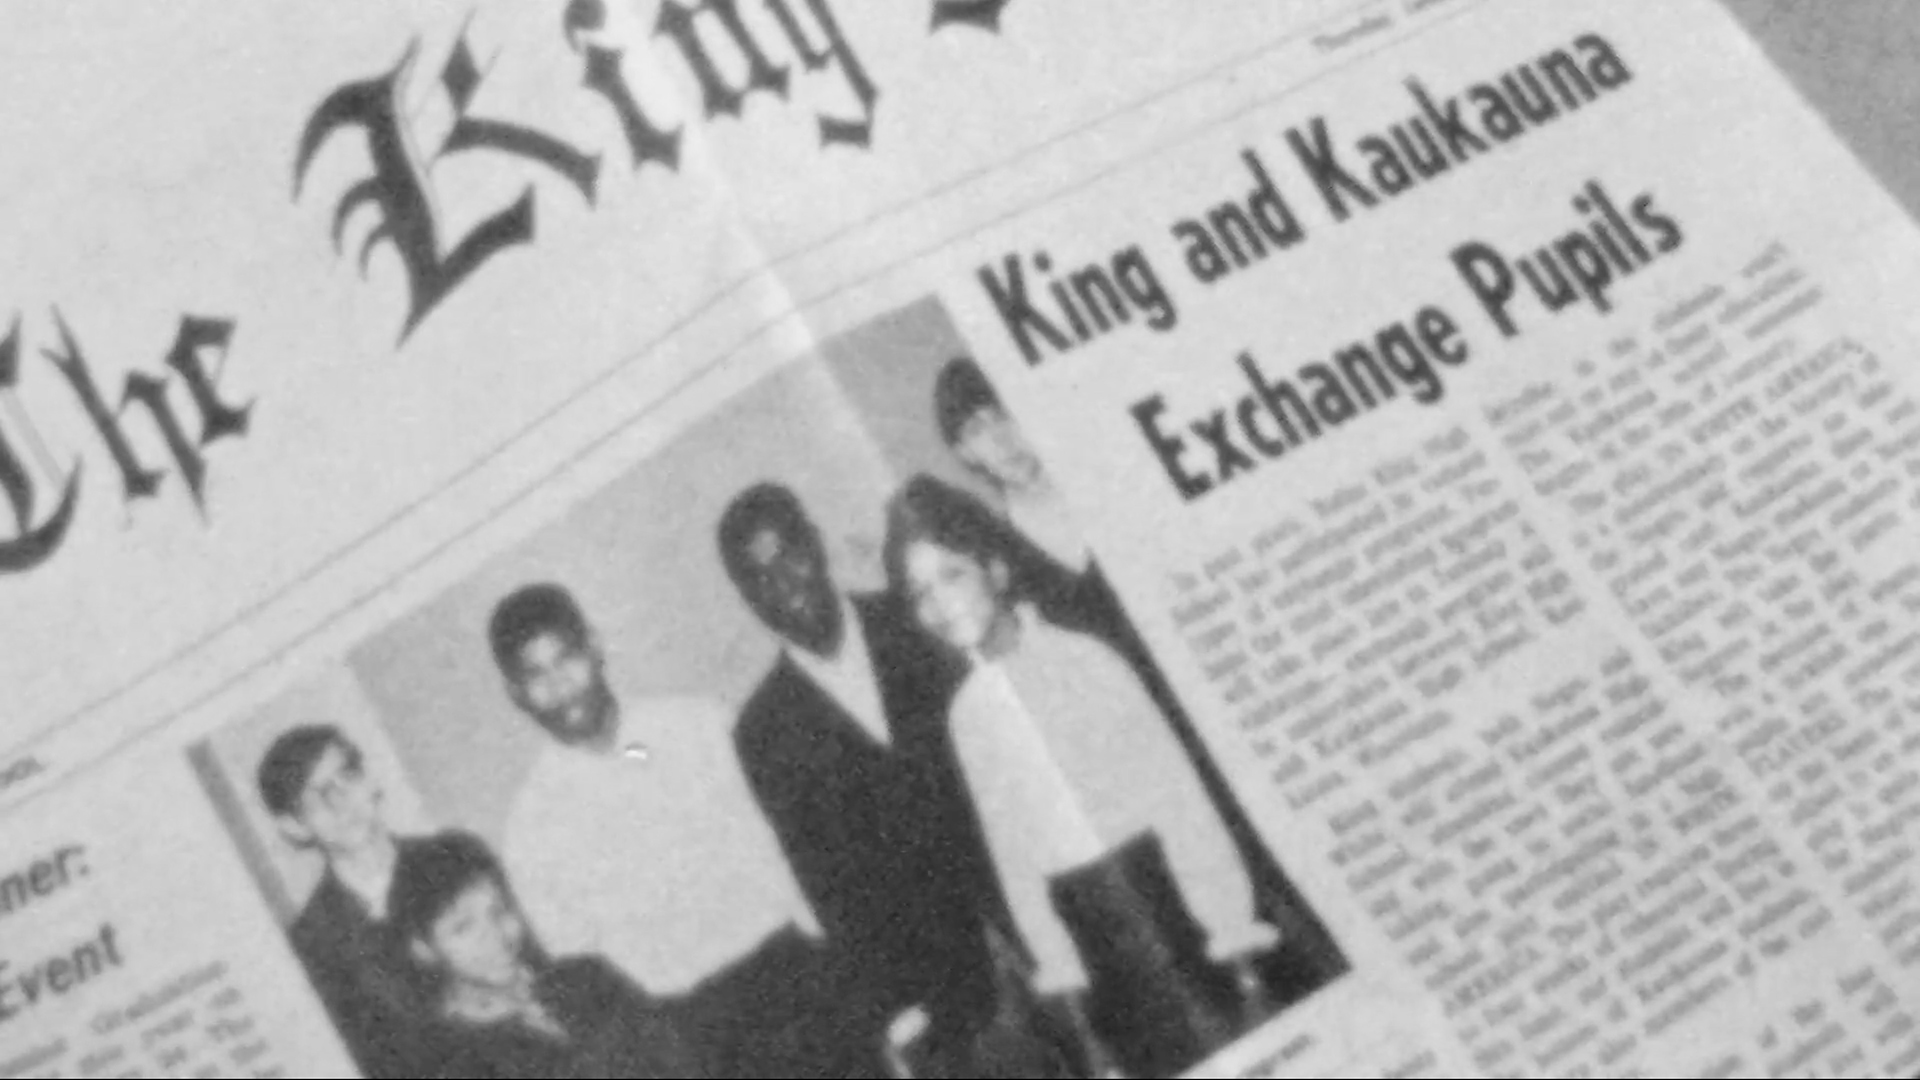 Archive newspaper showing the headline King and Kaukauna Exchange Pupils